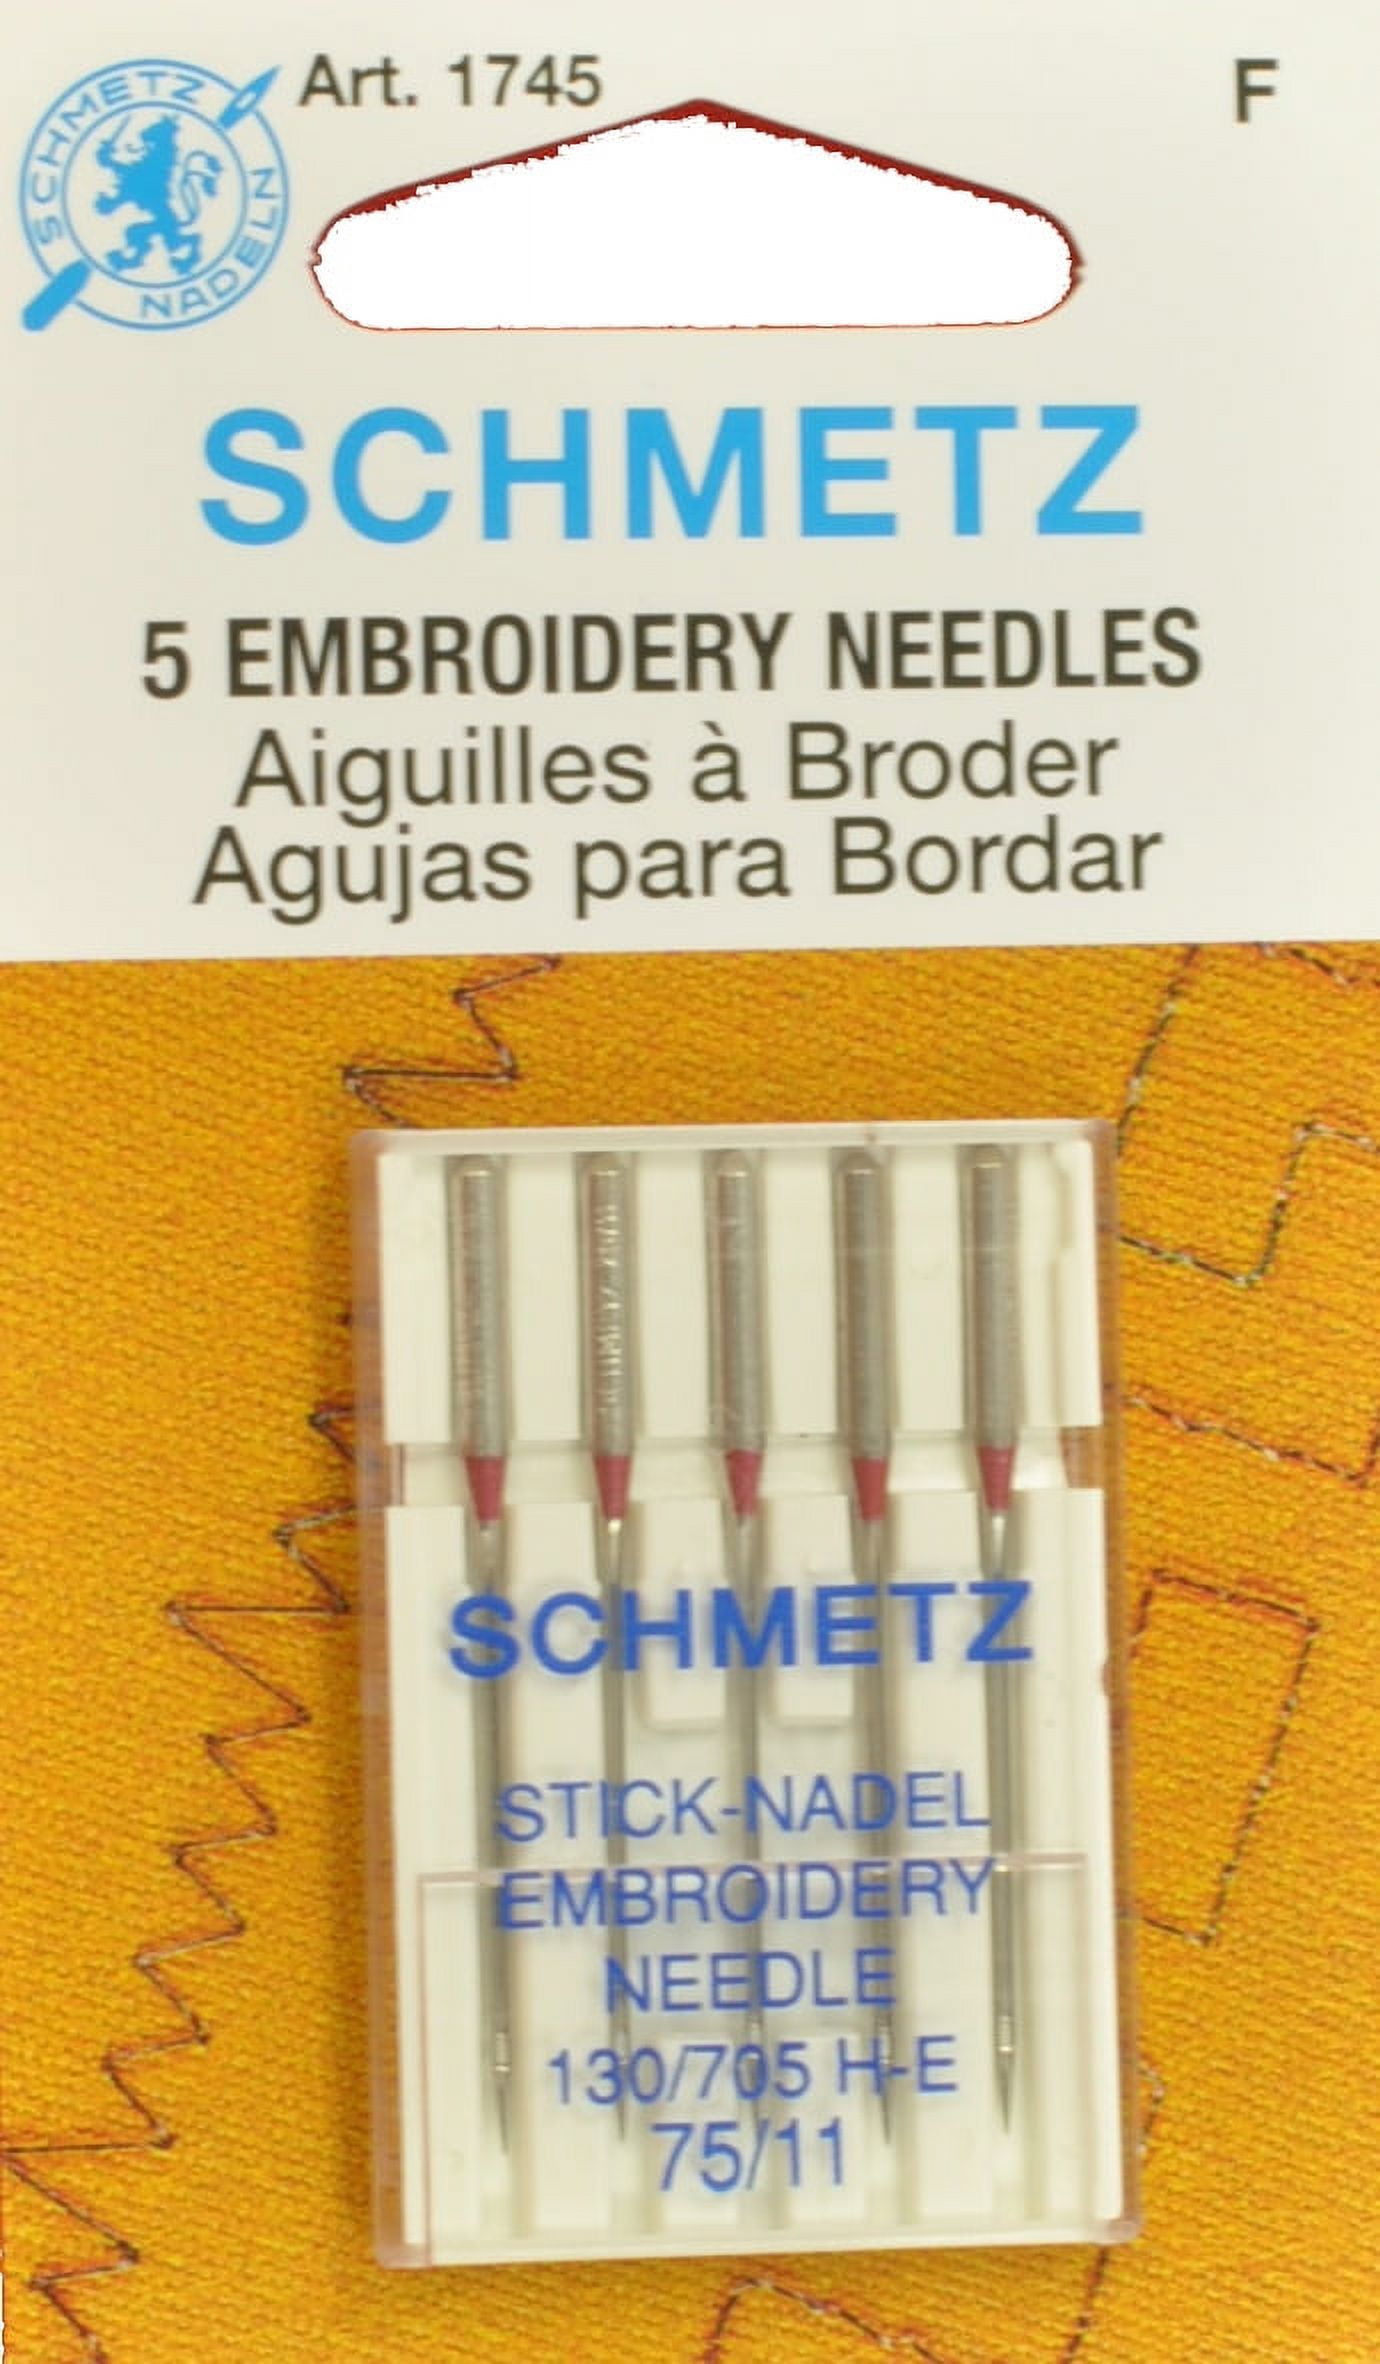 Schmetz Embroidery Sewing Machine Needles Size 11/75 item # EMB-11